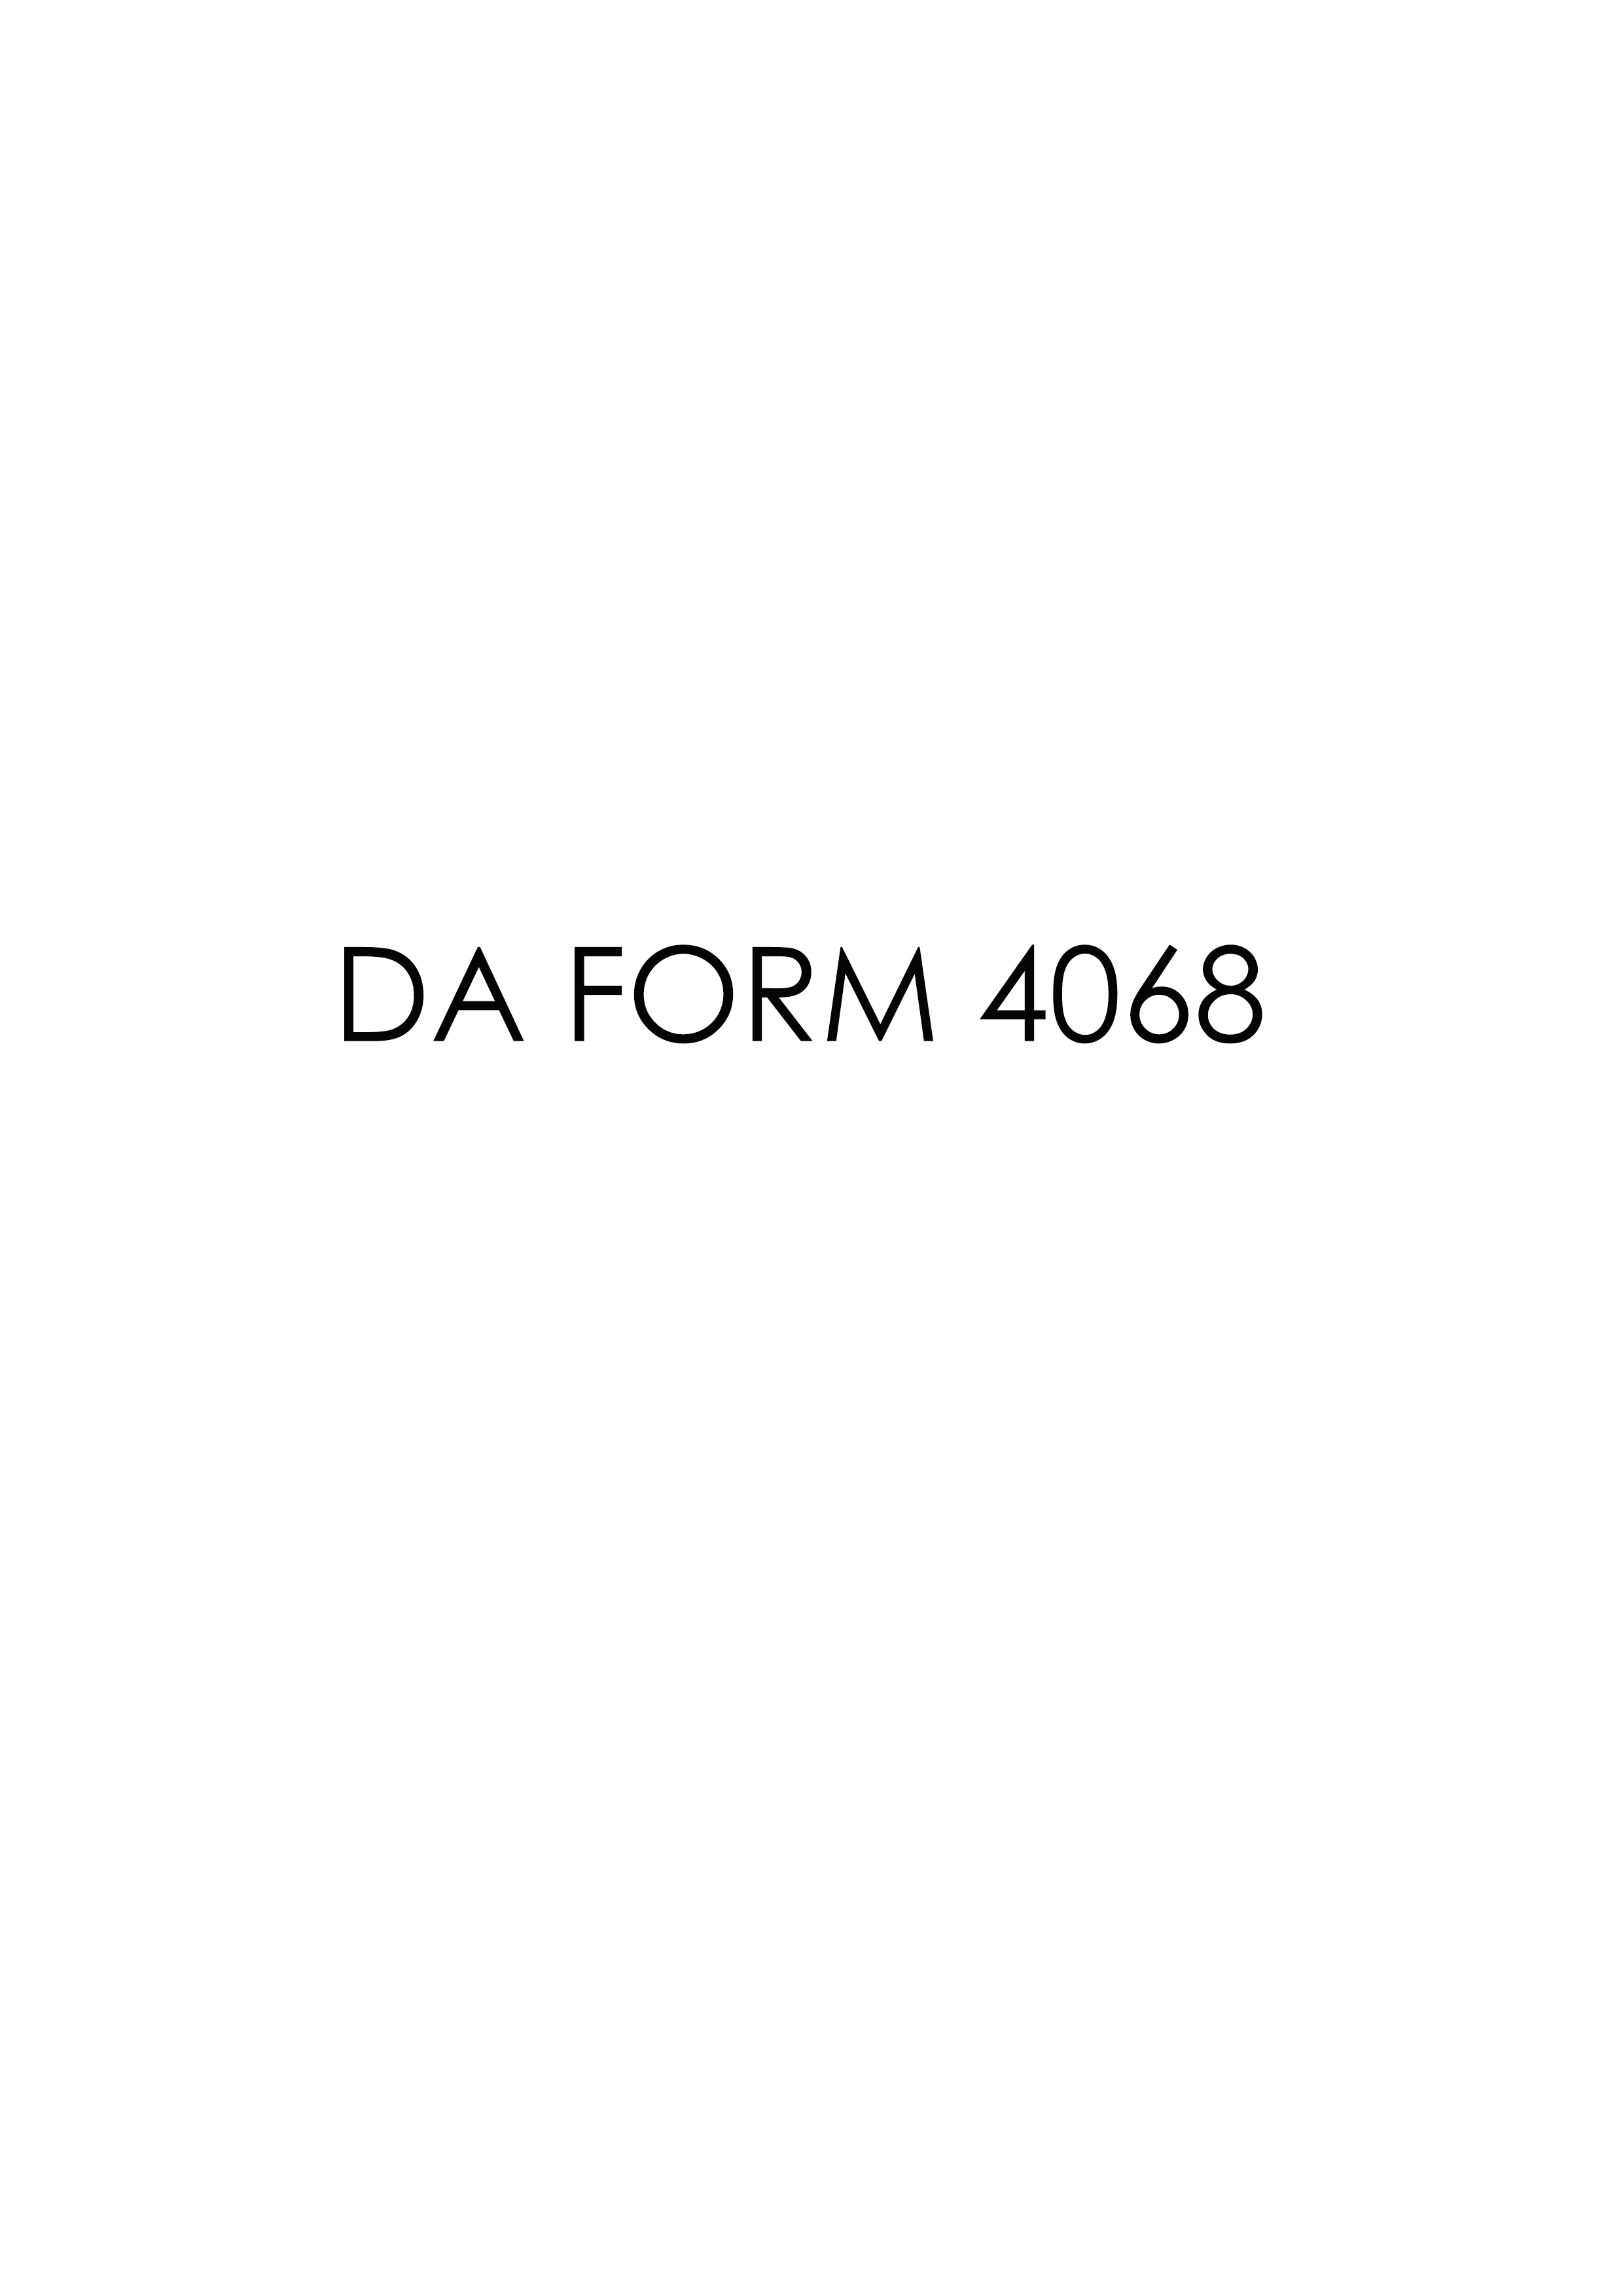 da Form 4068 fillable